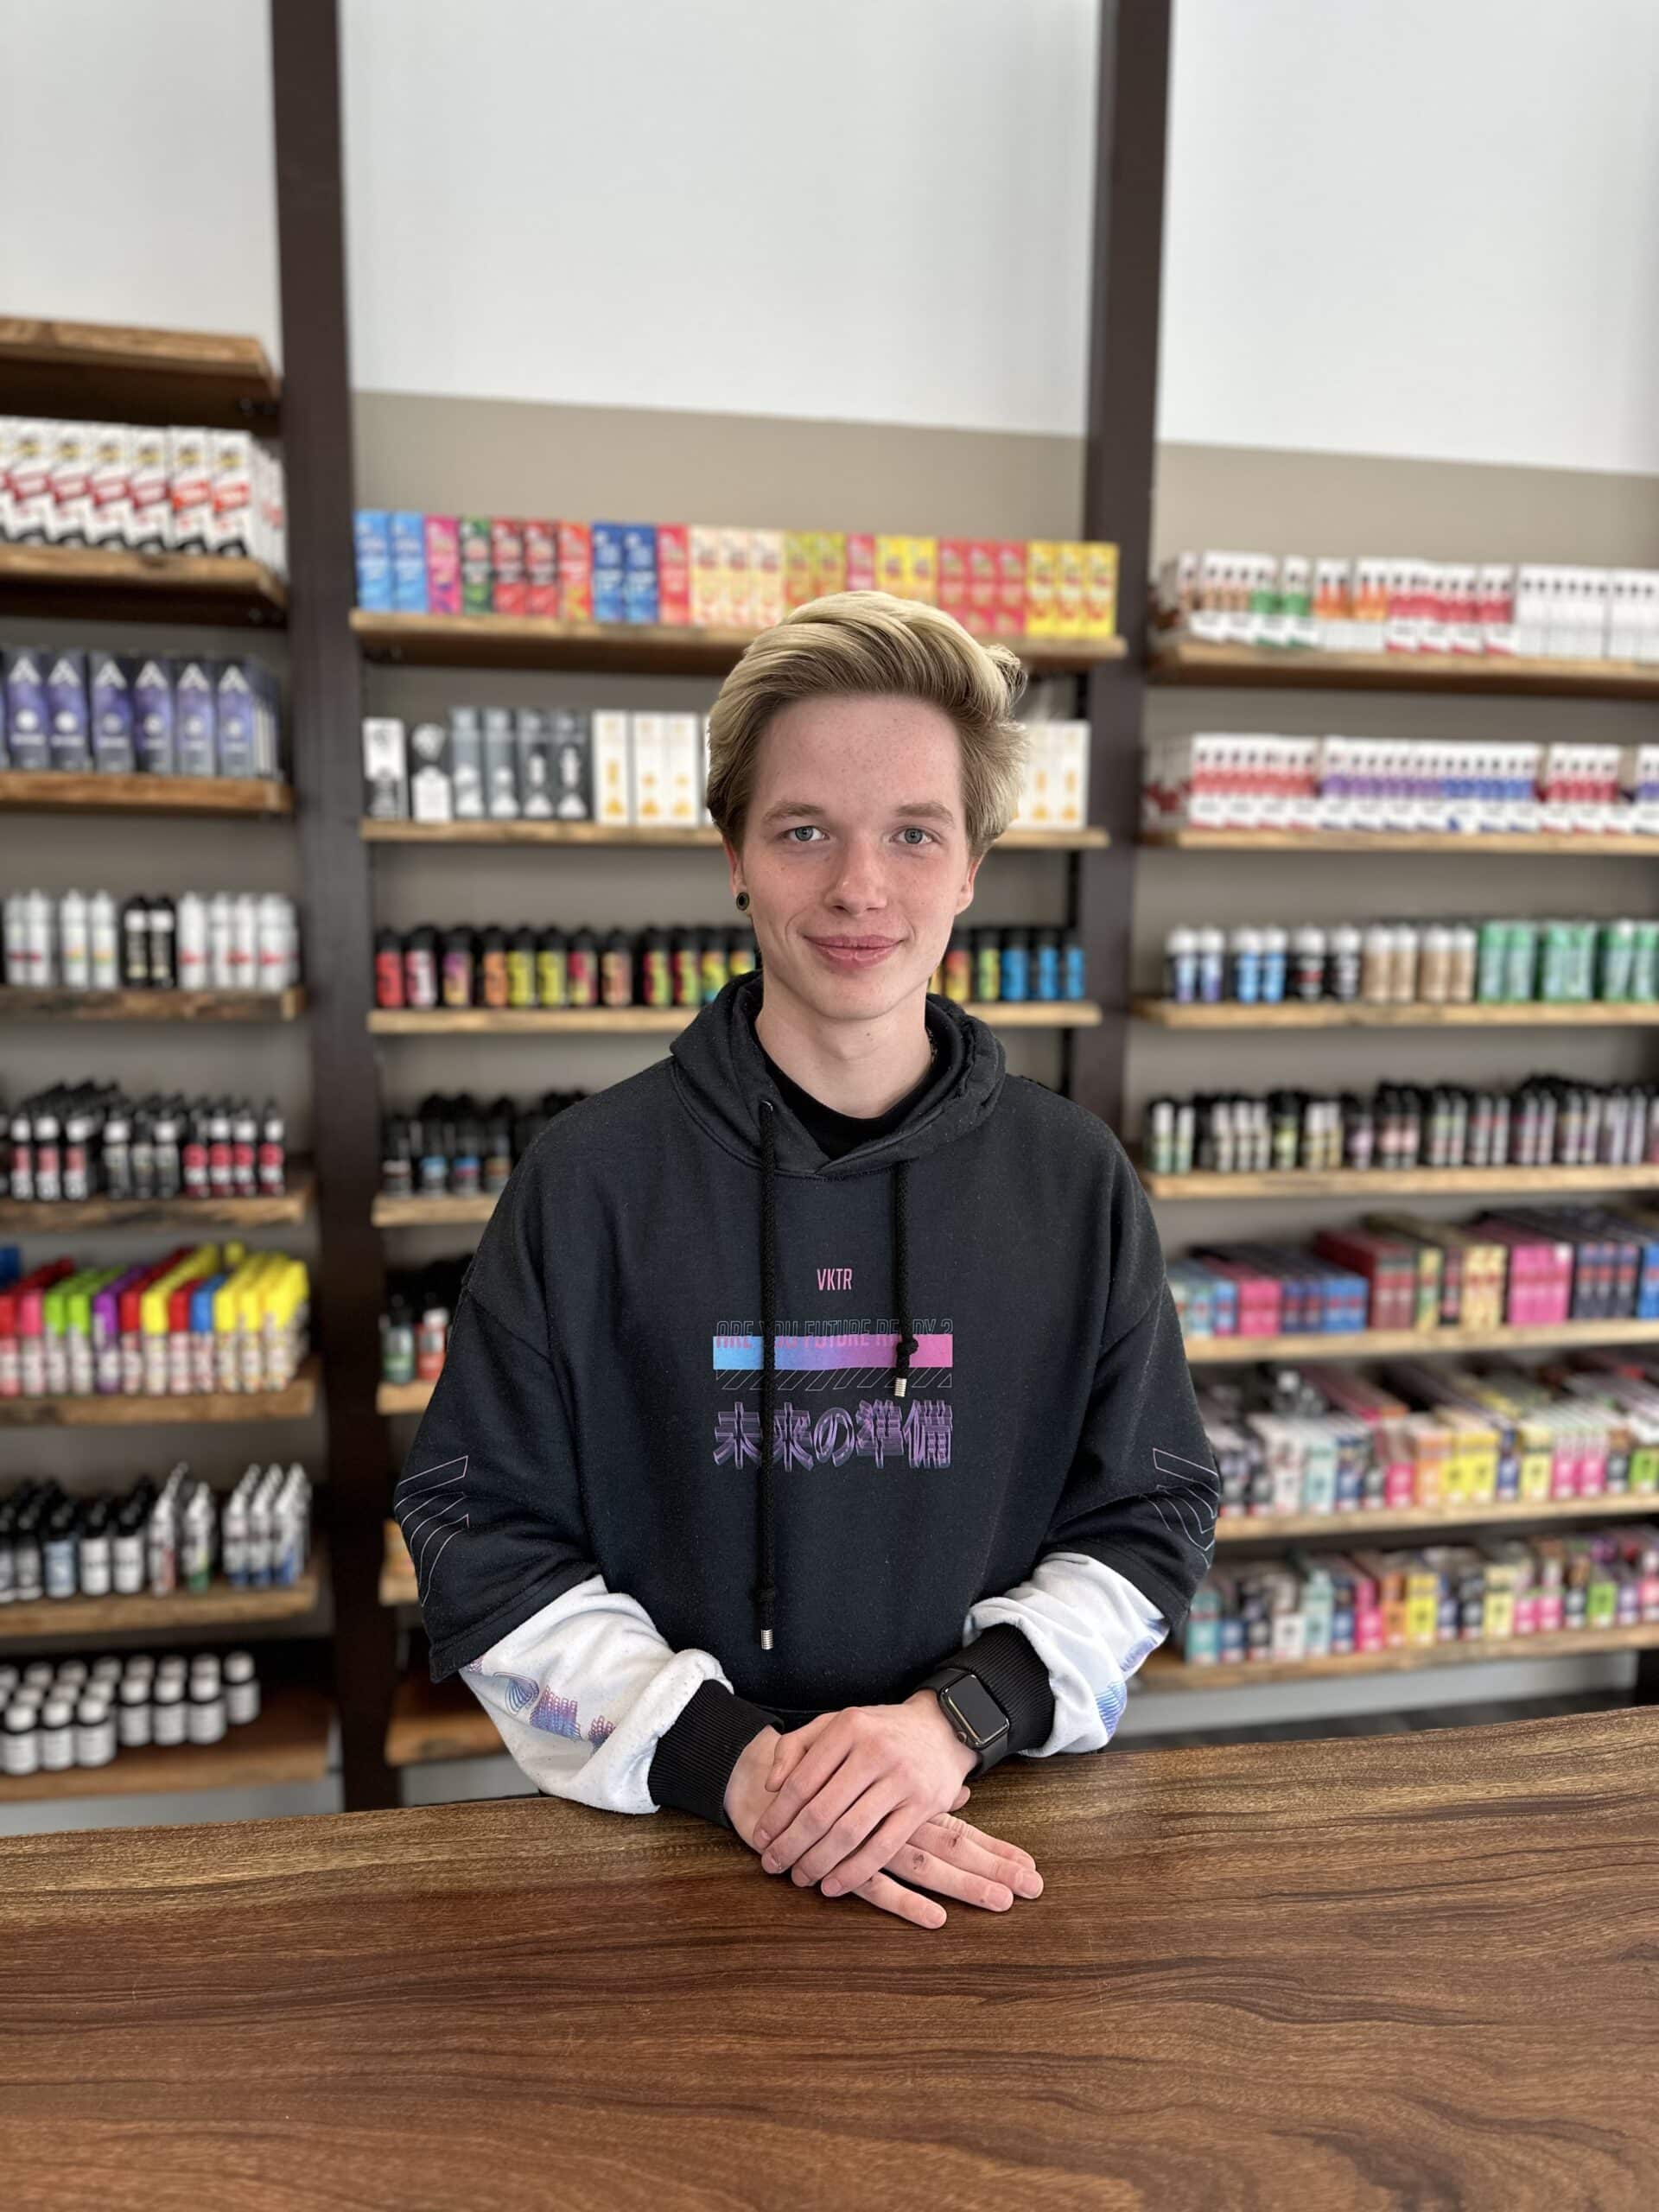 Nick Vape Experte Team Mitglied bei Vape Station E-Zigaretten Shop Köln